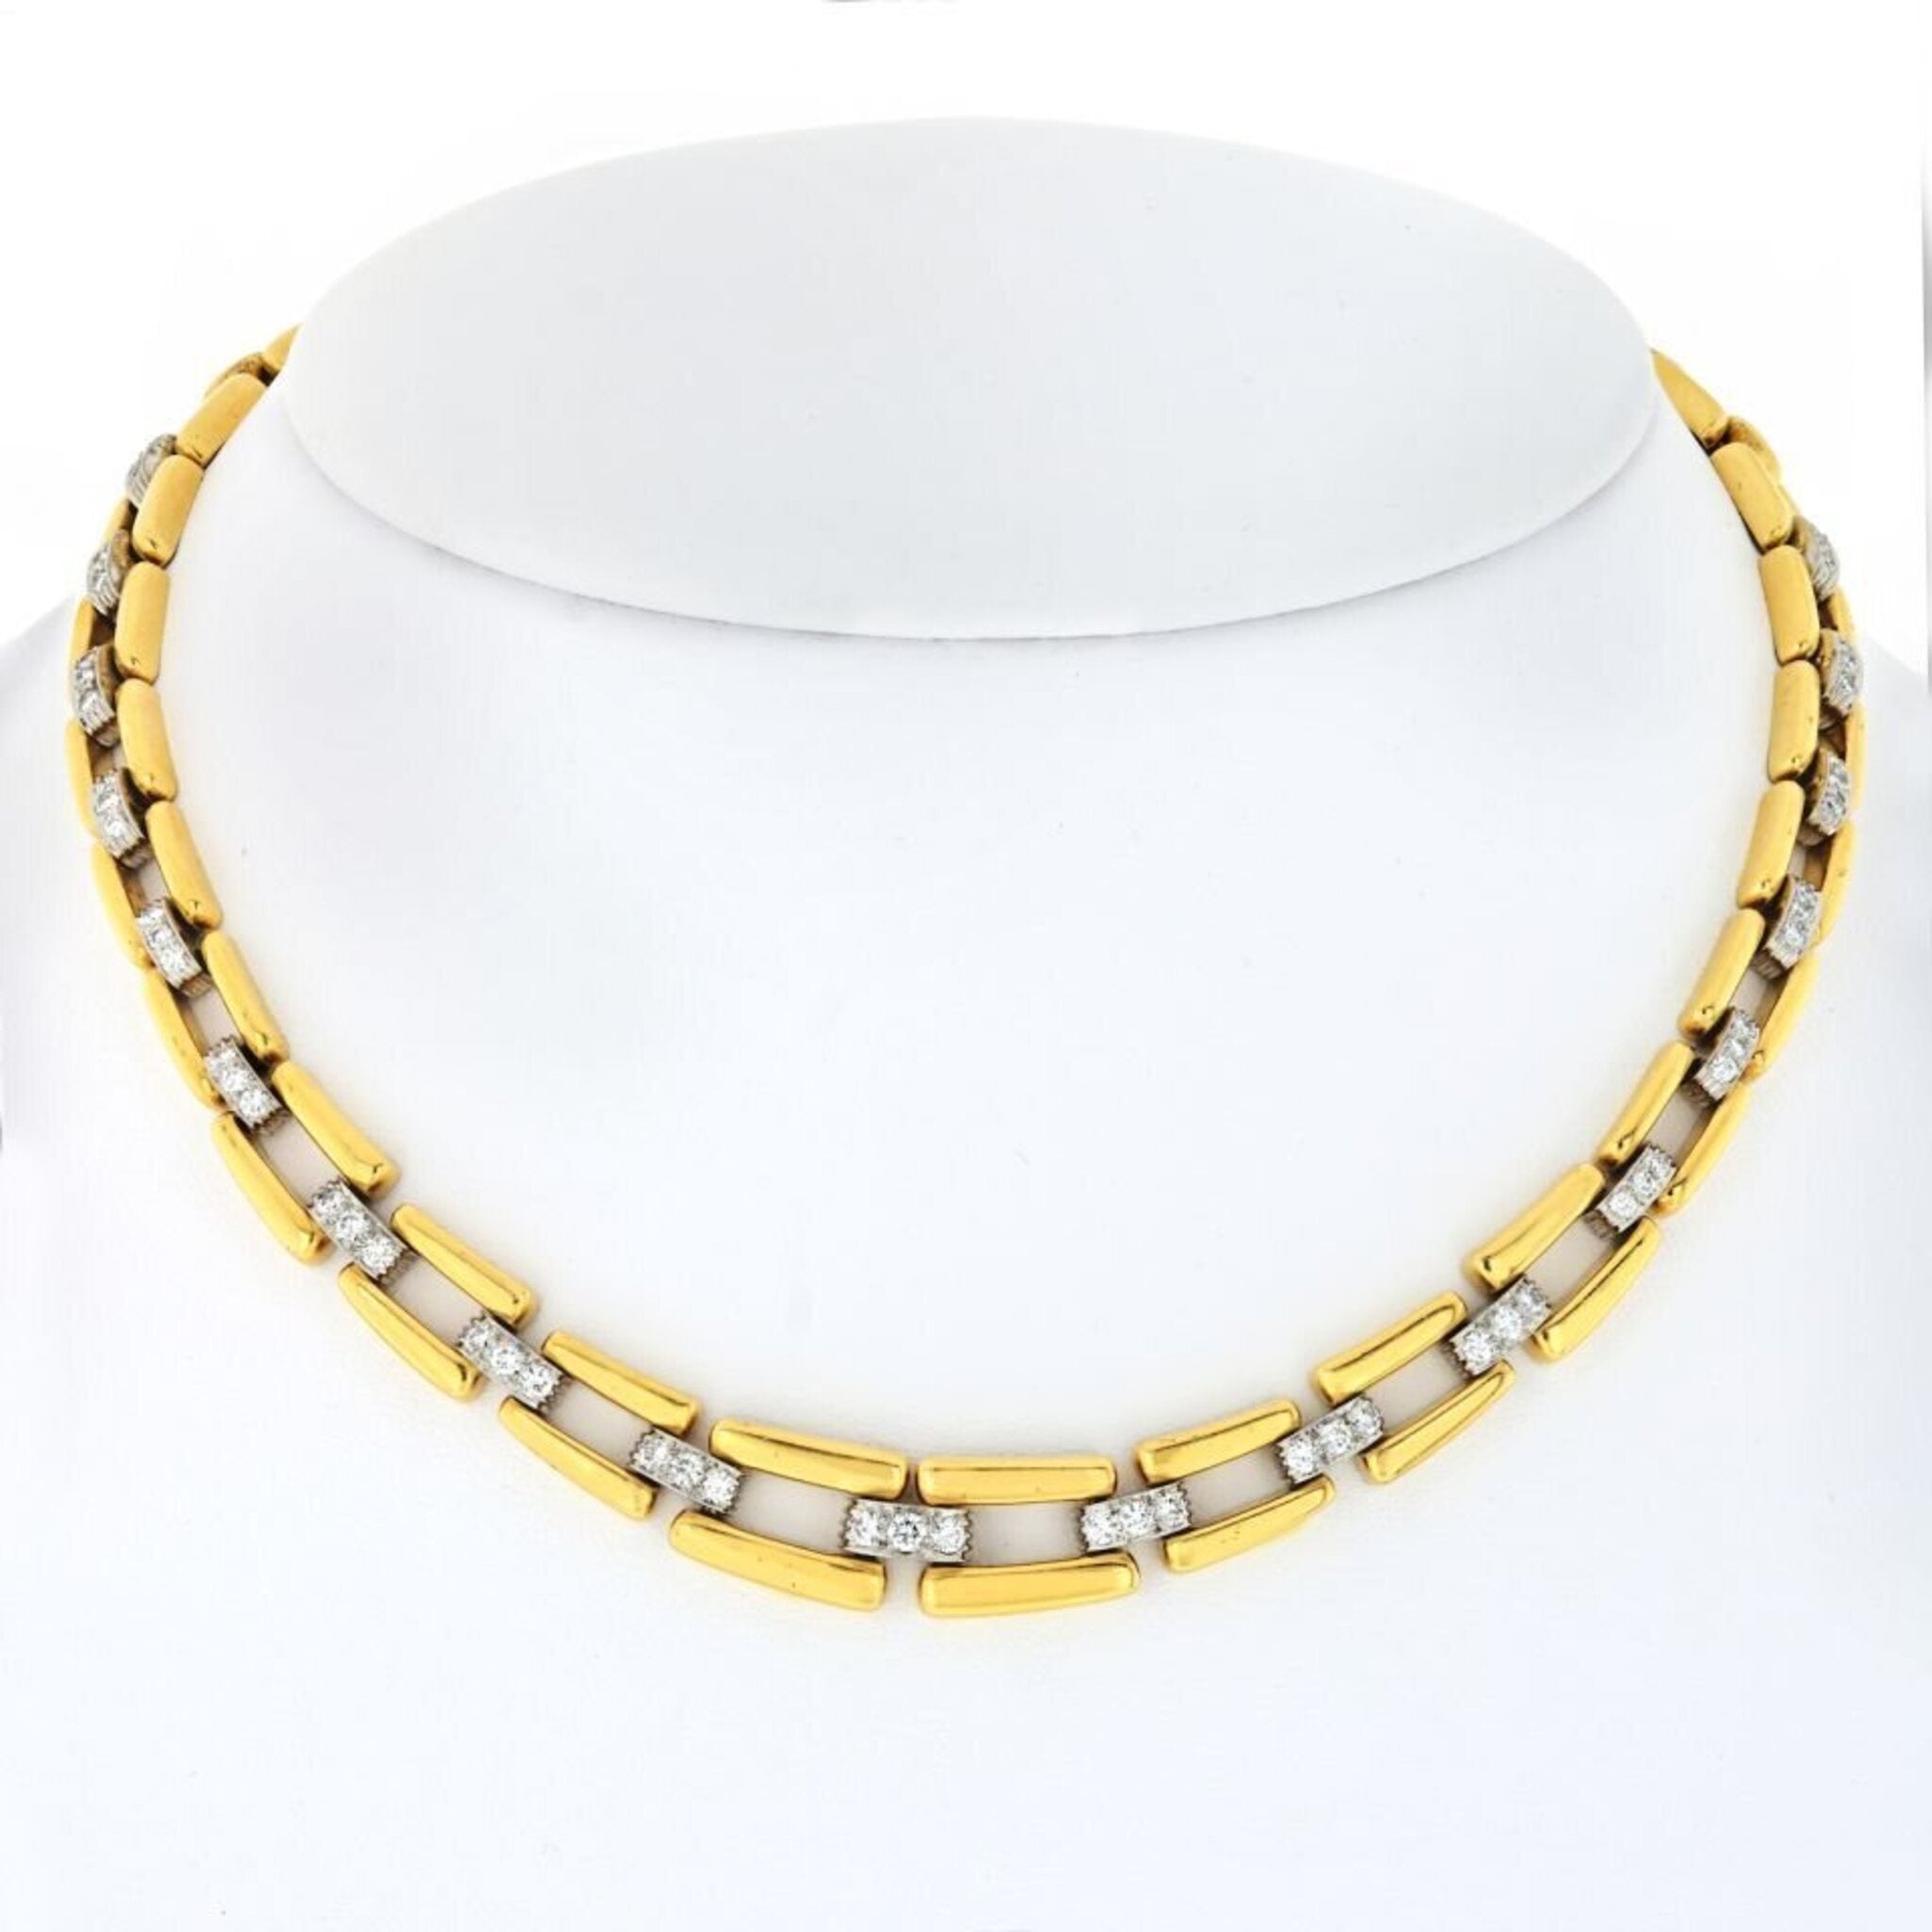 David Webb - Collar Platinum & 18K Yellow Gold Open Link Diamond Chain Necklace